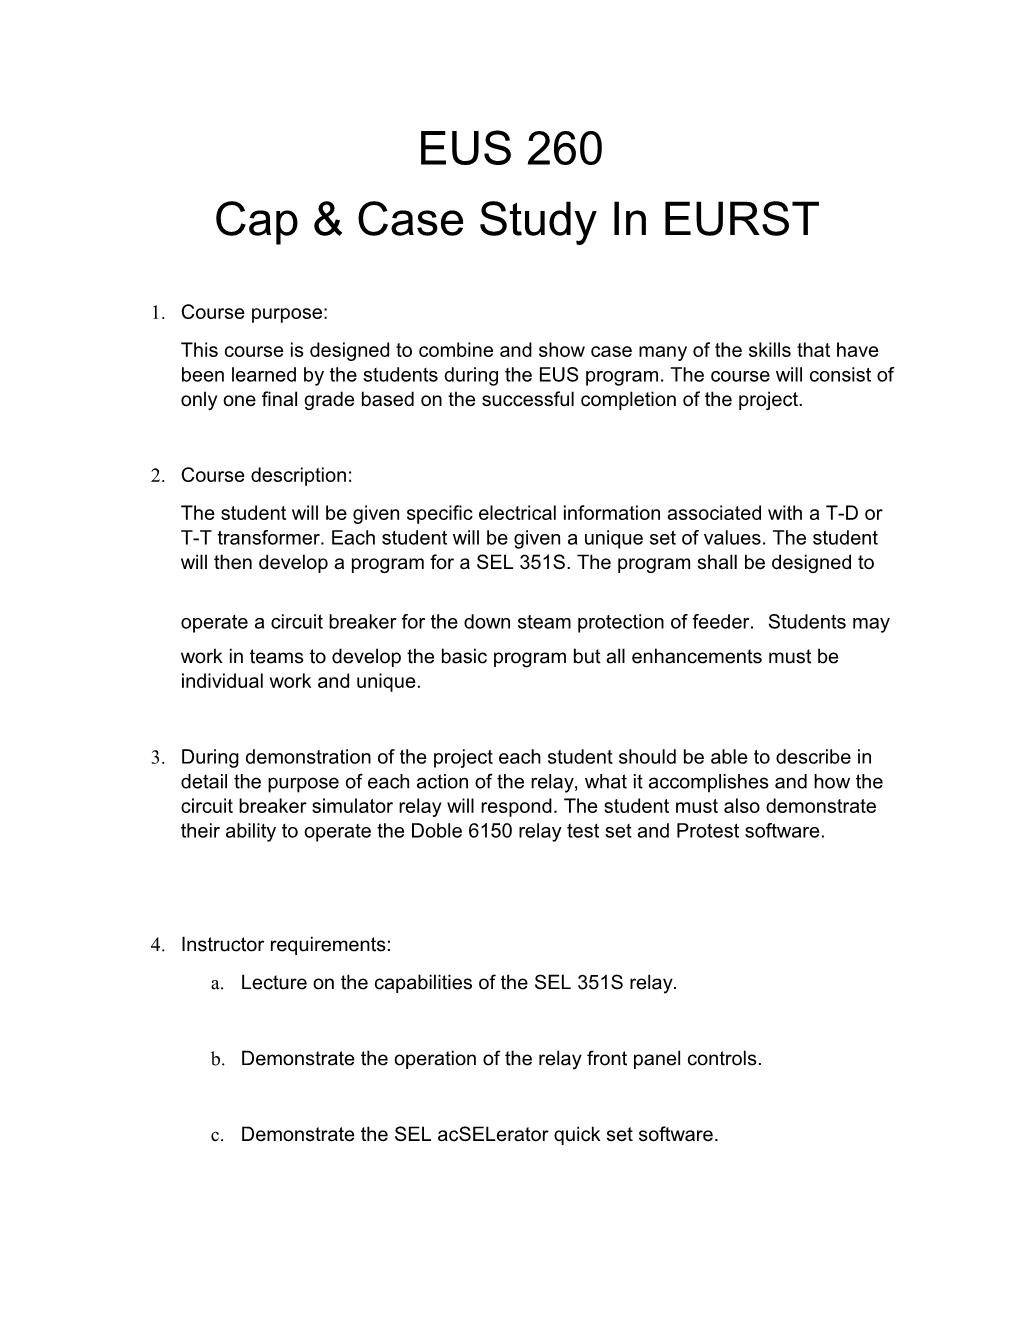 Cap & Case Studyin EURST